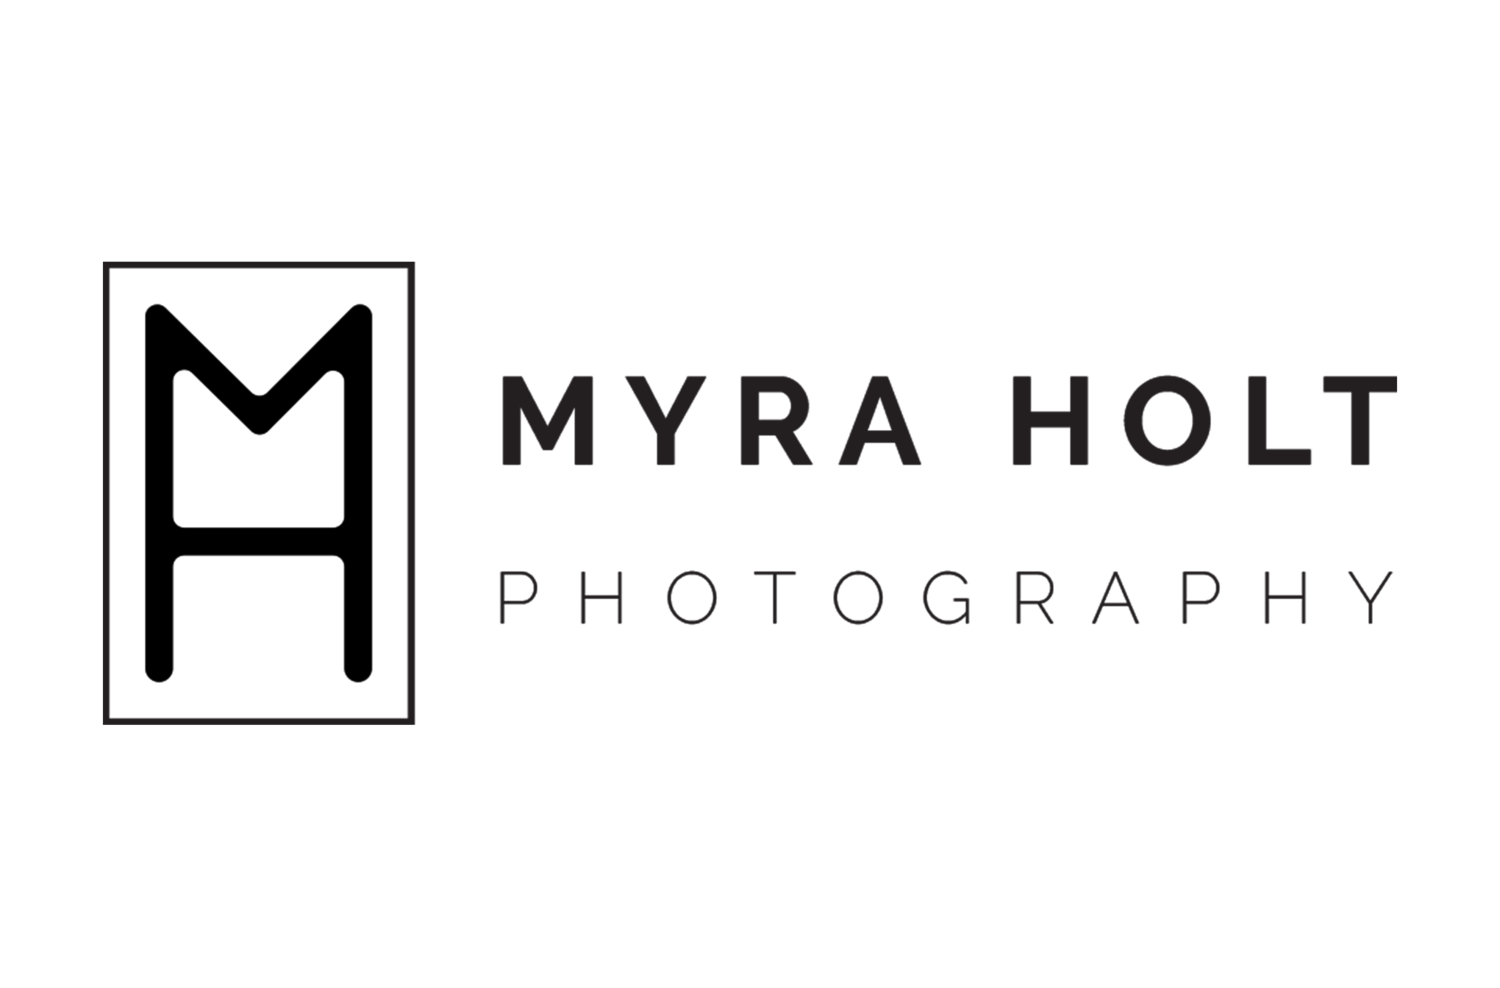 Myra Holt Photography